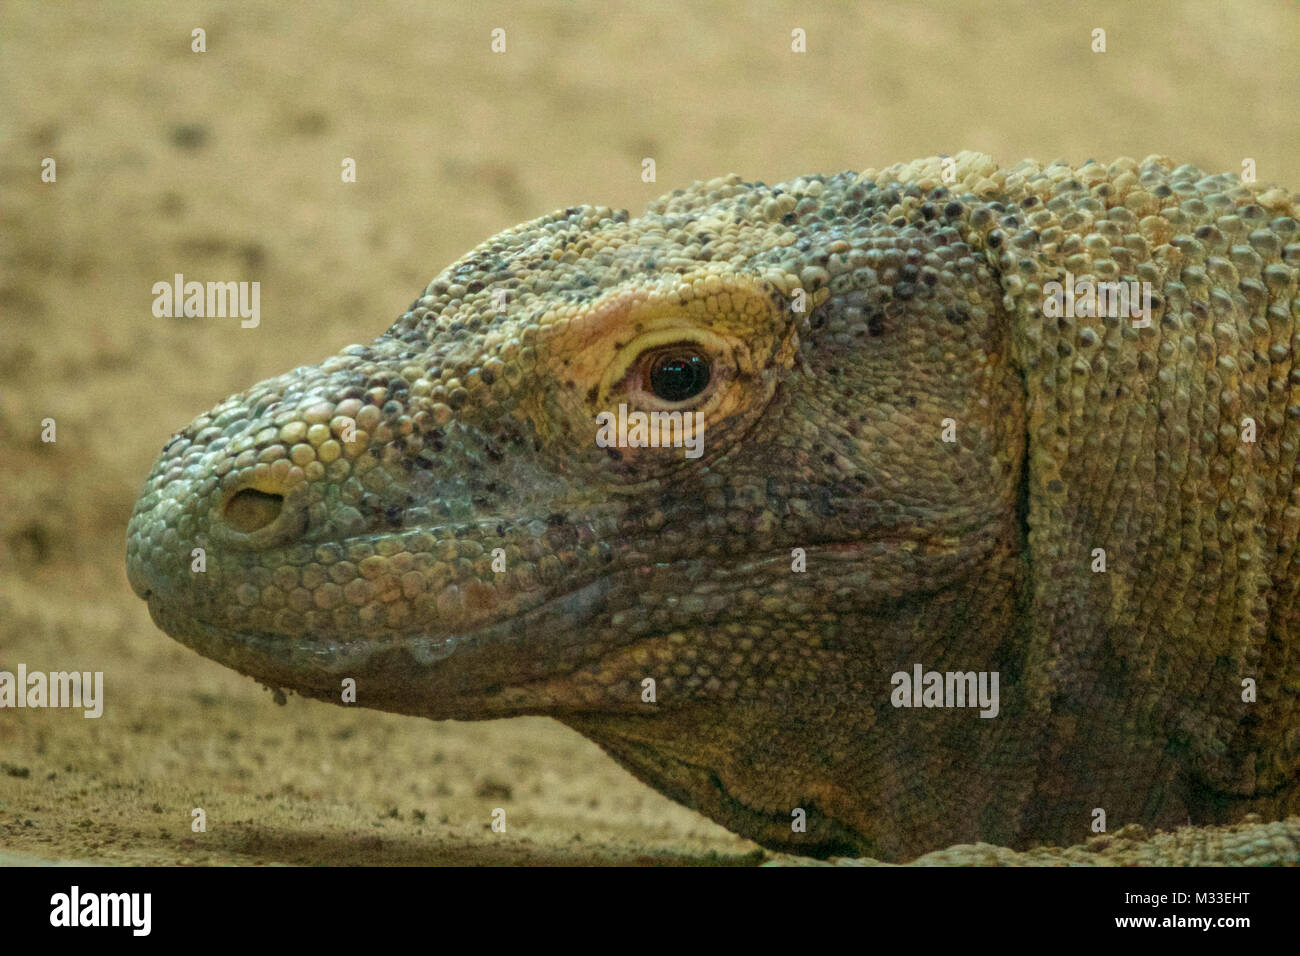 Komodo dragon close up of head Stock Photo